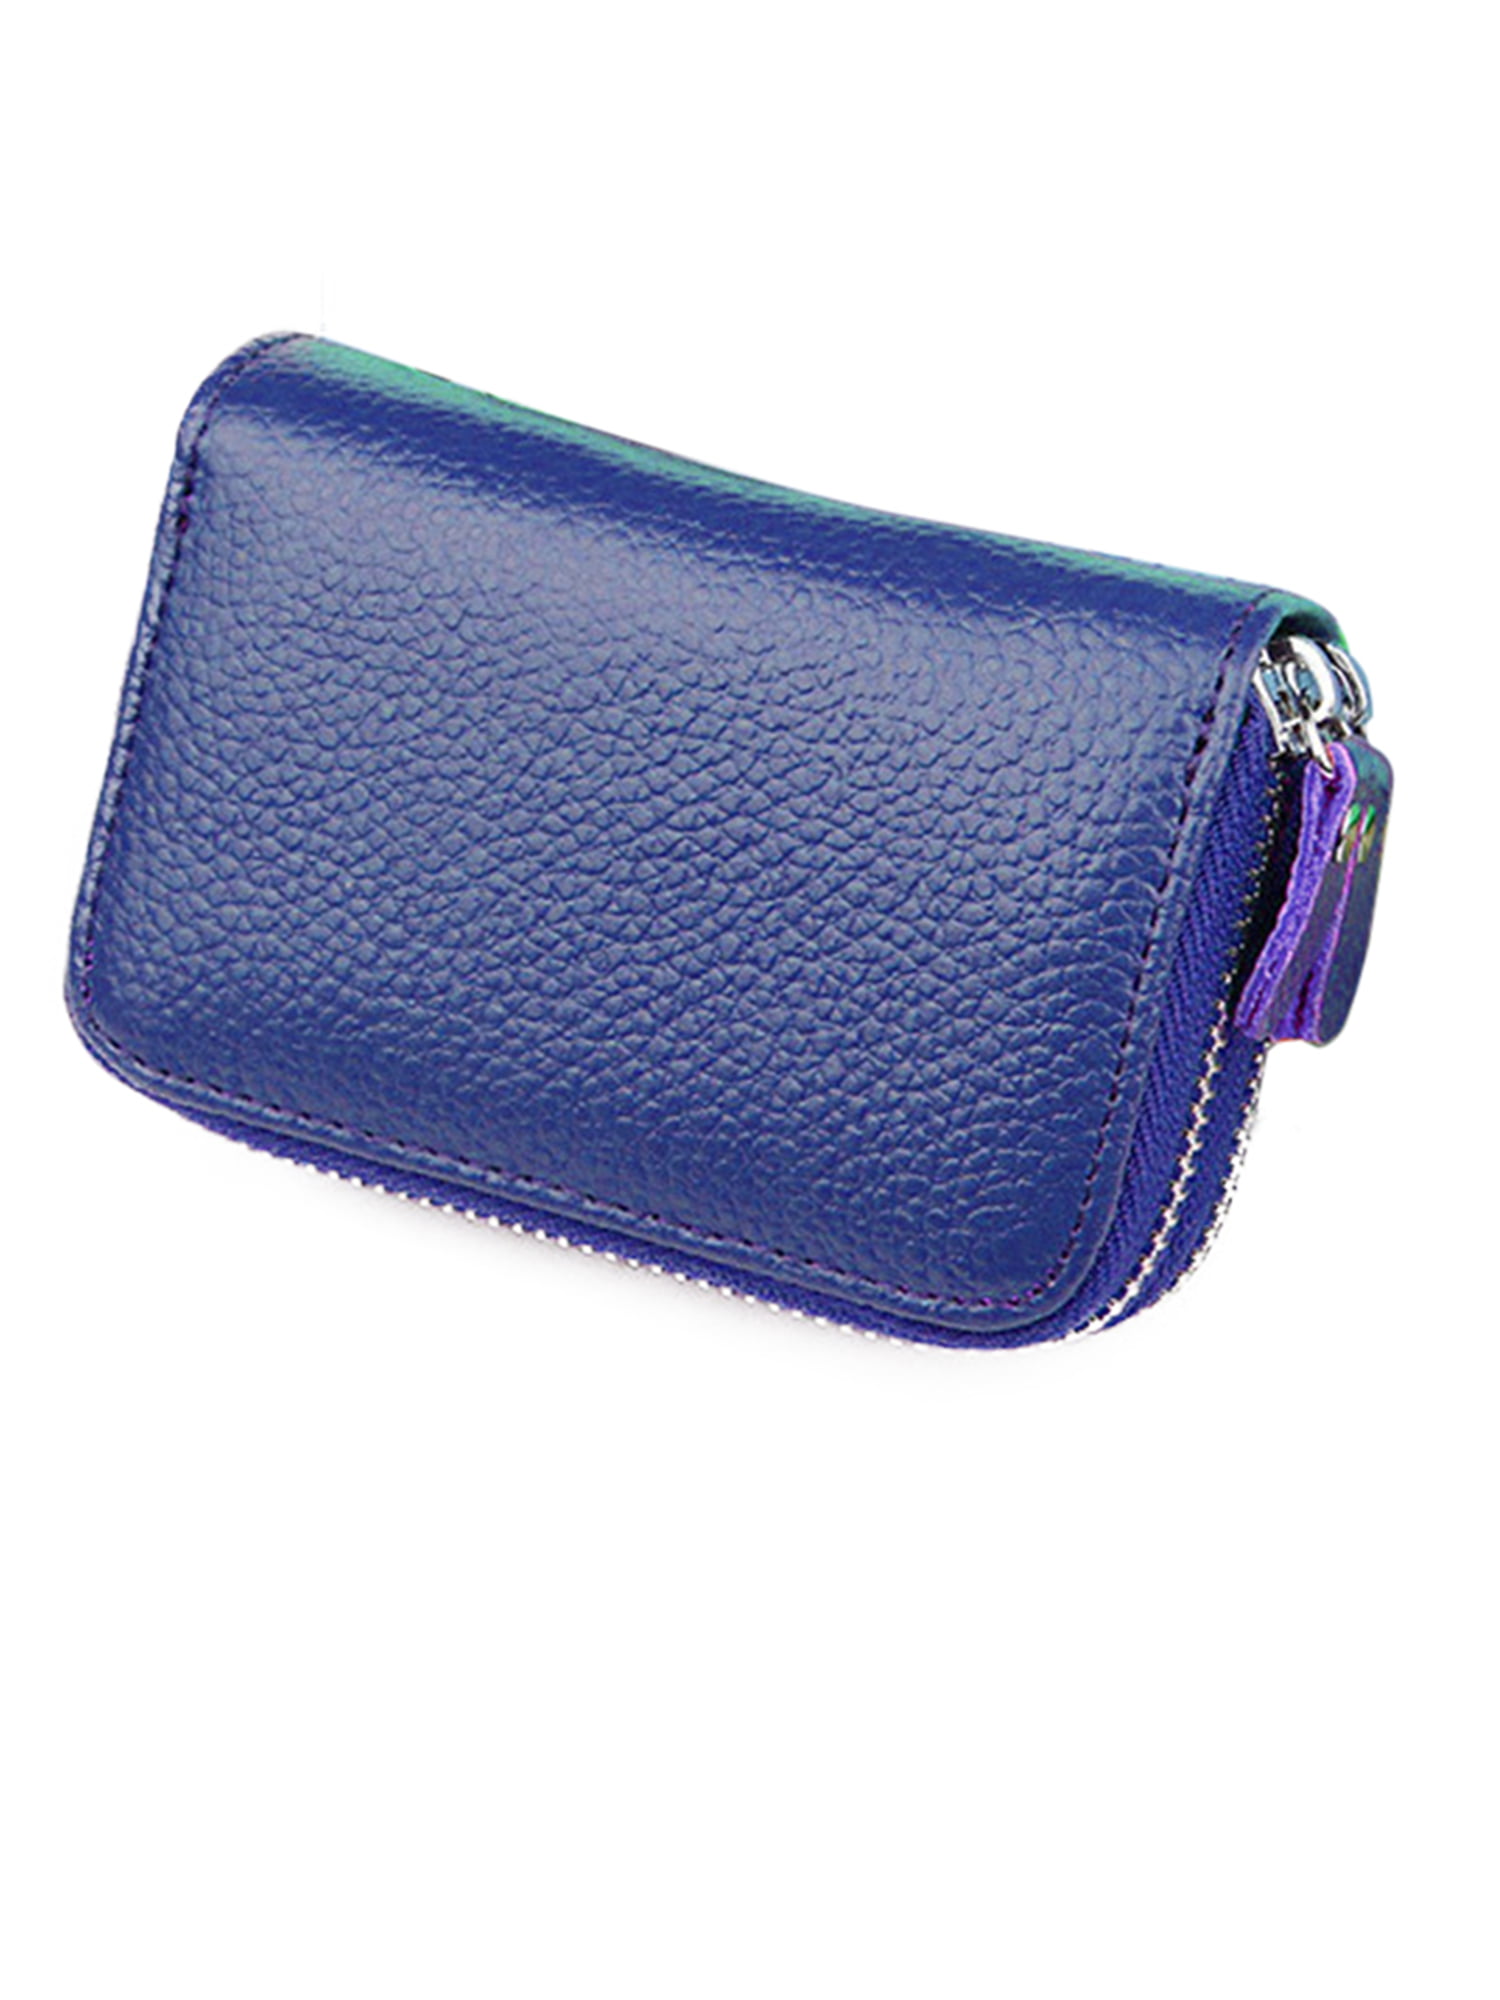 Wodstyle - Women Coin Purse Card Wallet Clutch Double Zip Mini Small Handbag - 0 ...